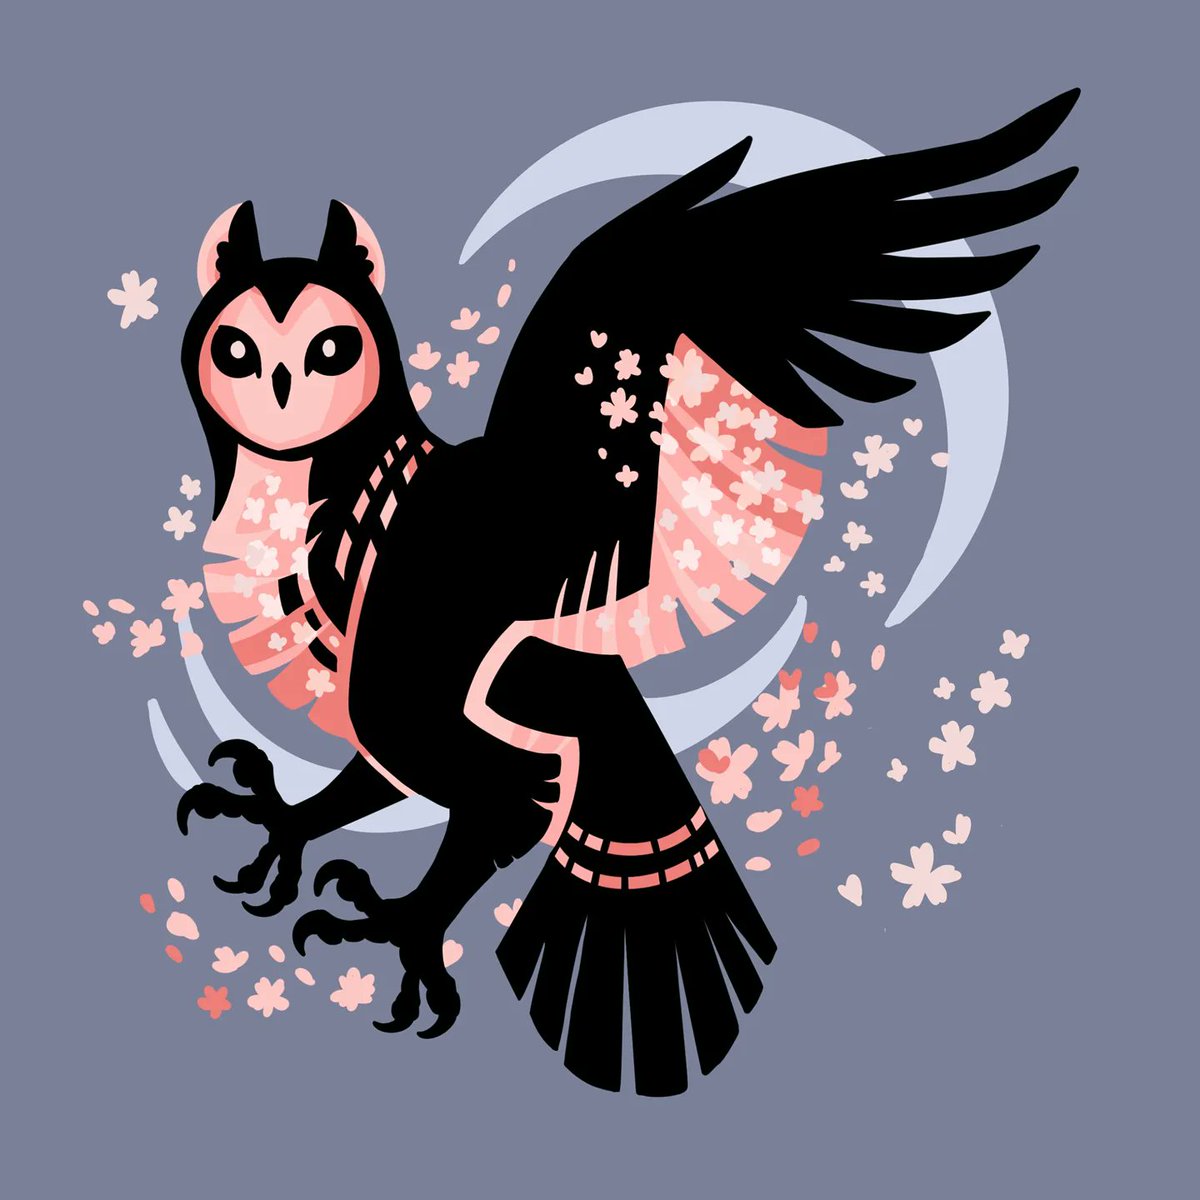 「🌸💙 Hope you owl all having a good spri」|Diana 🐦 🇨🇦のイラスト